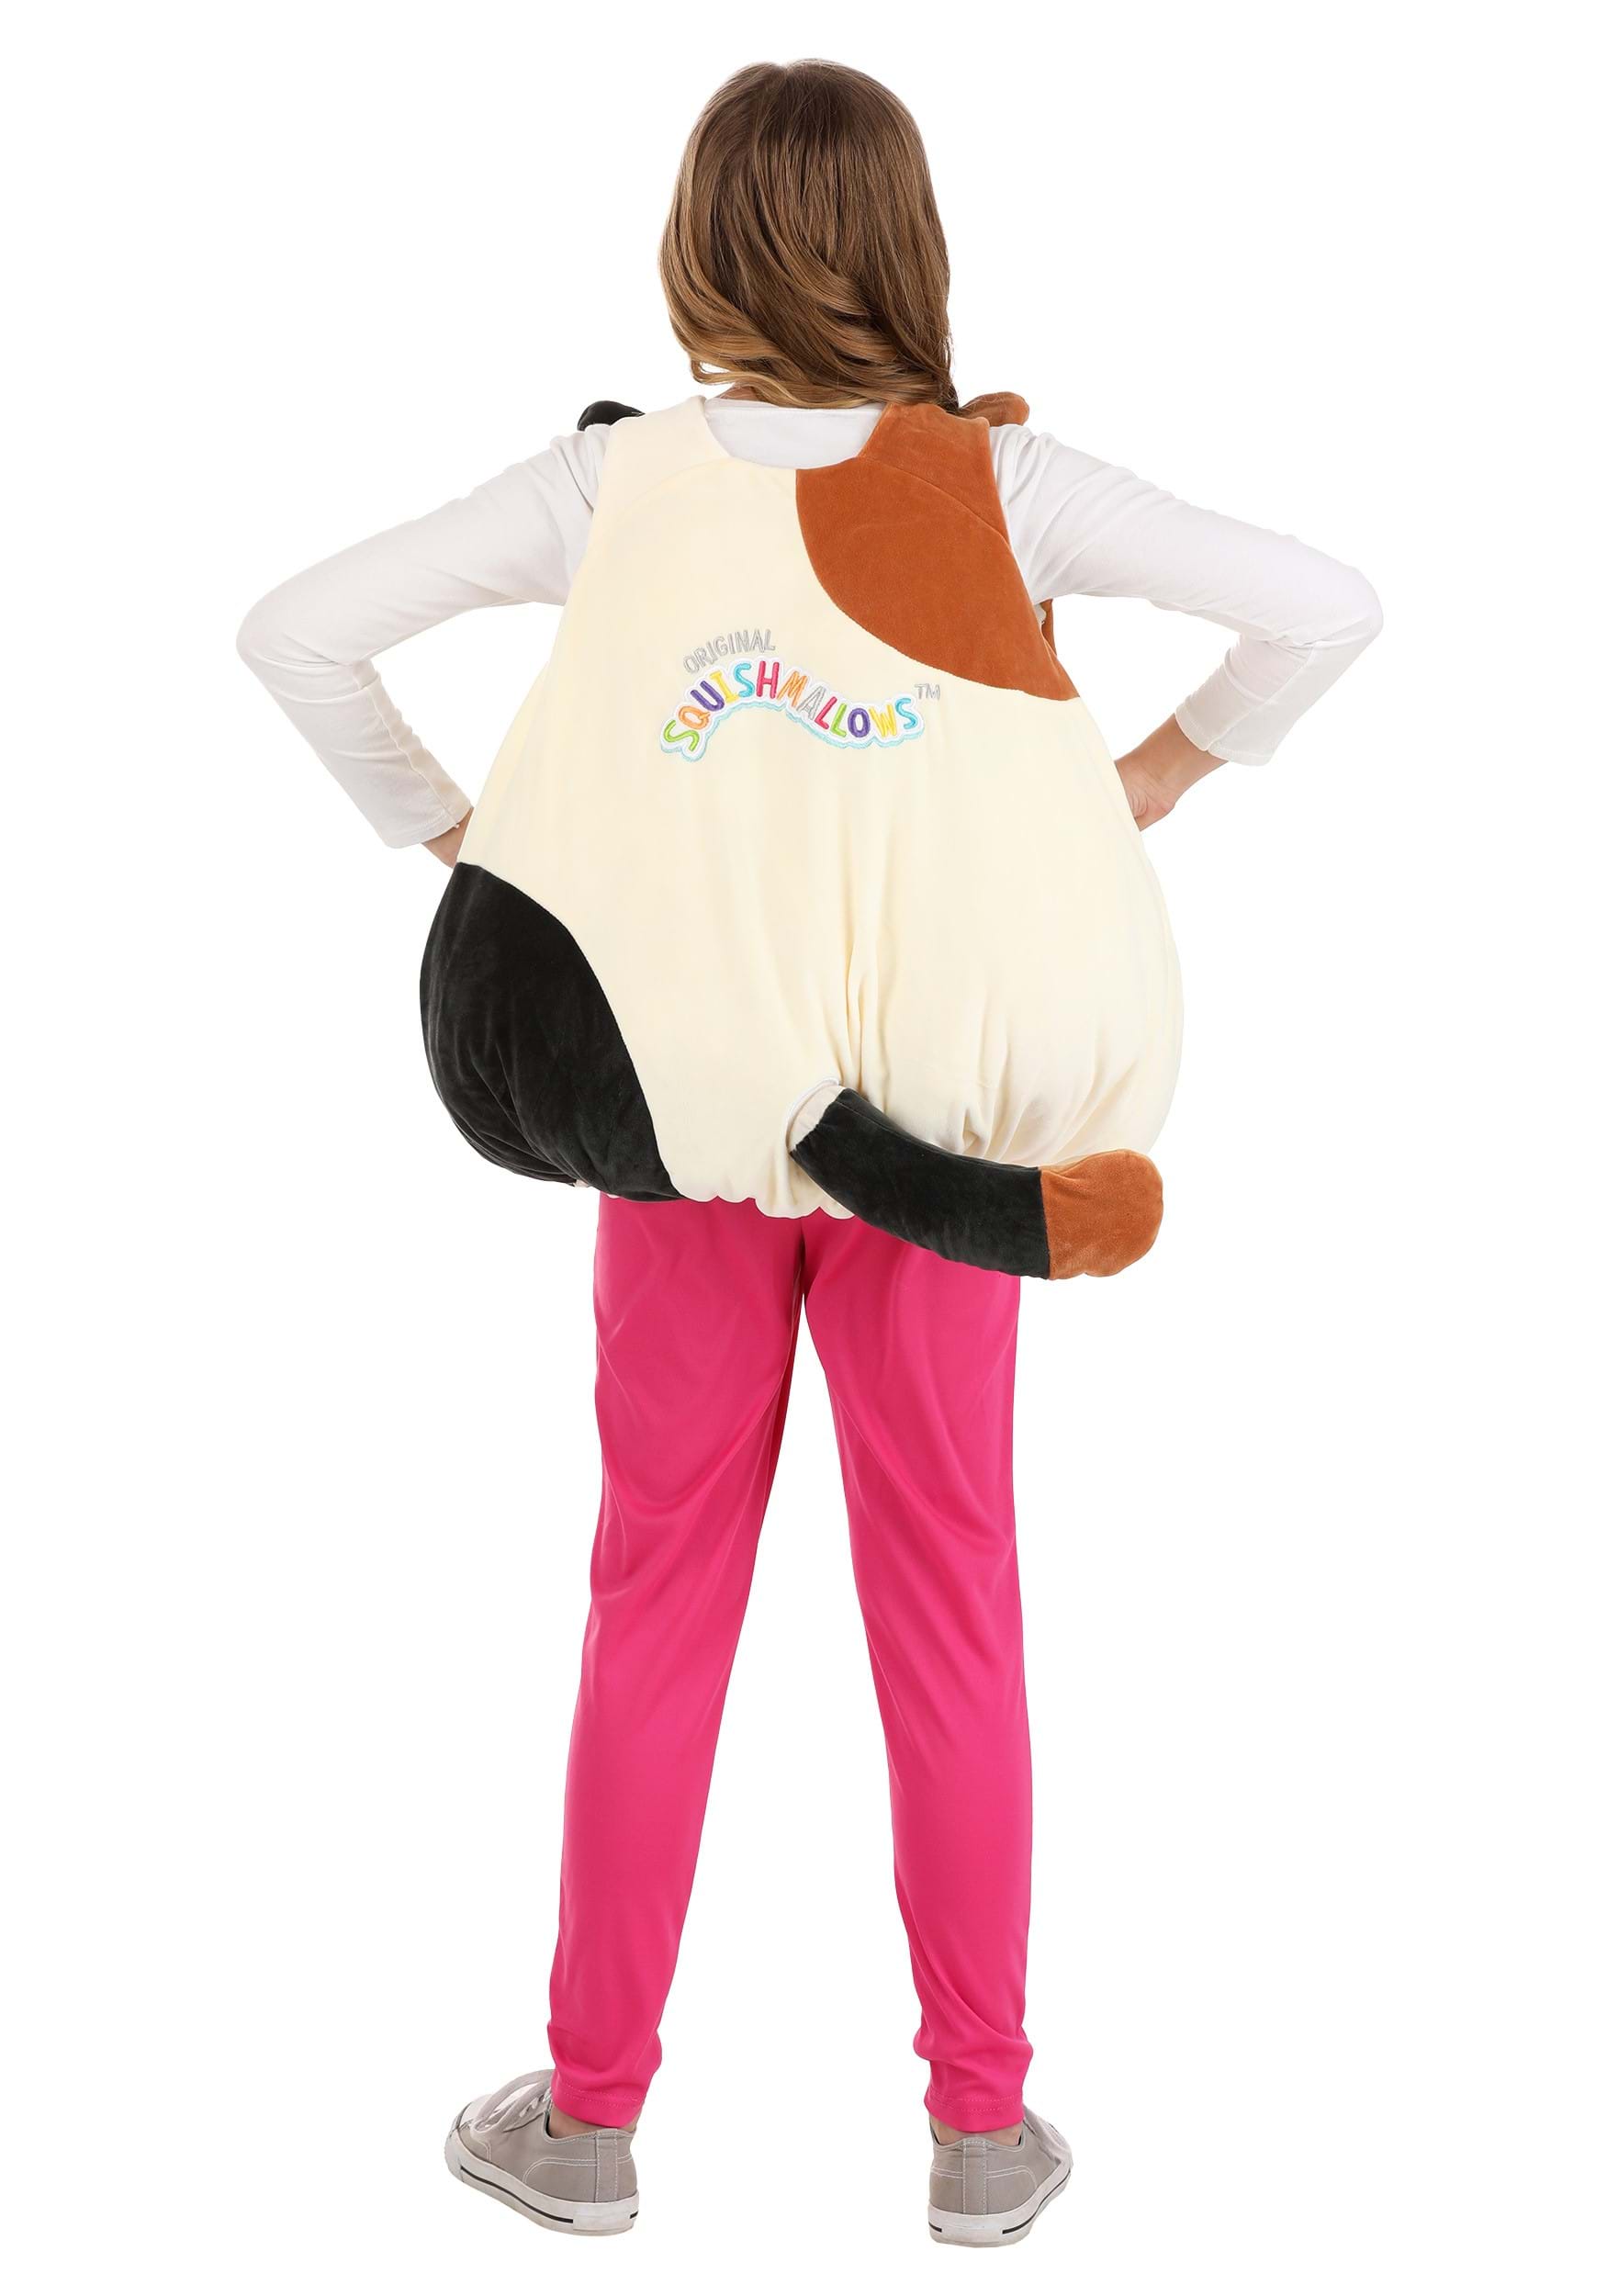 https://images.fun.com/products/86918/2-1-272389/squishmallow-cam-the-cat-costume-alt-3.jpg